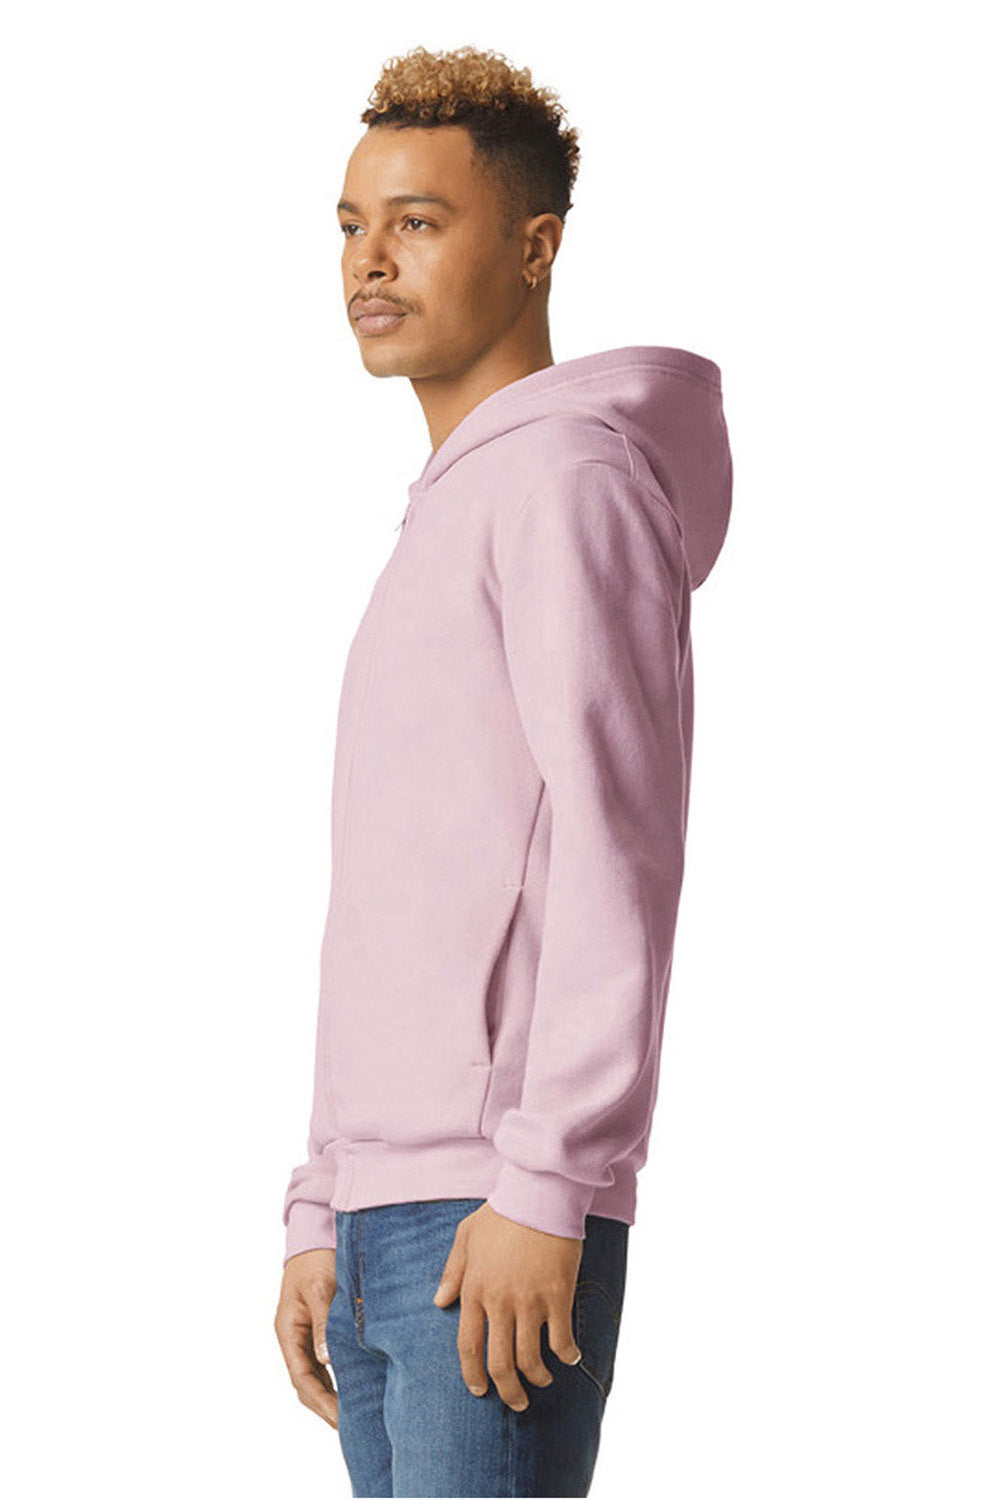 American Apparel RF497 Mens ReFlex Fleece Full Zip Hooded Sweatshirt Hoodie Blush Model Side